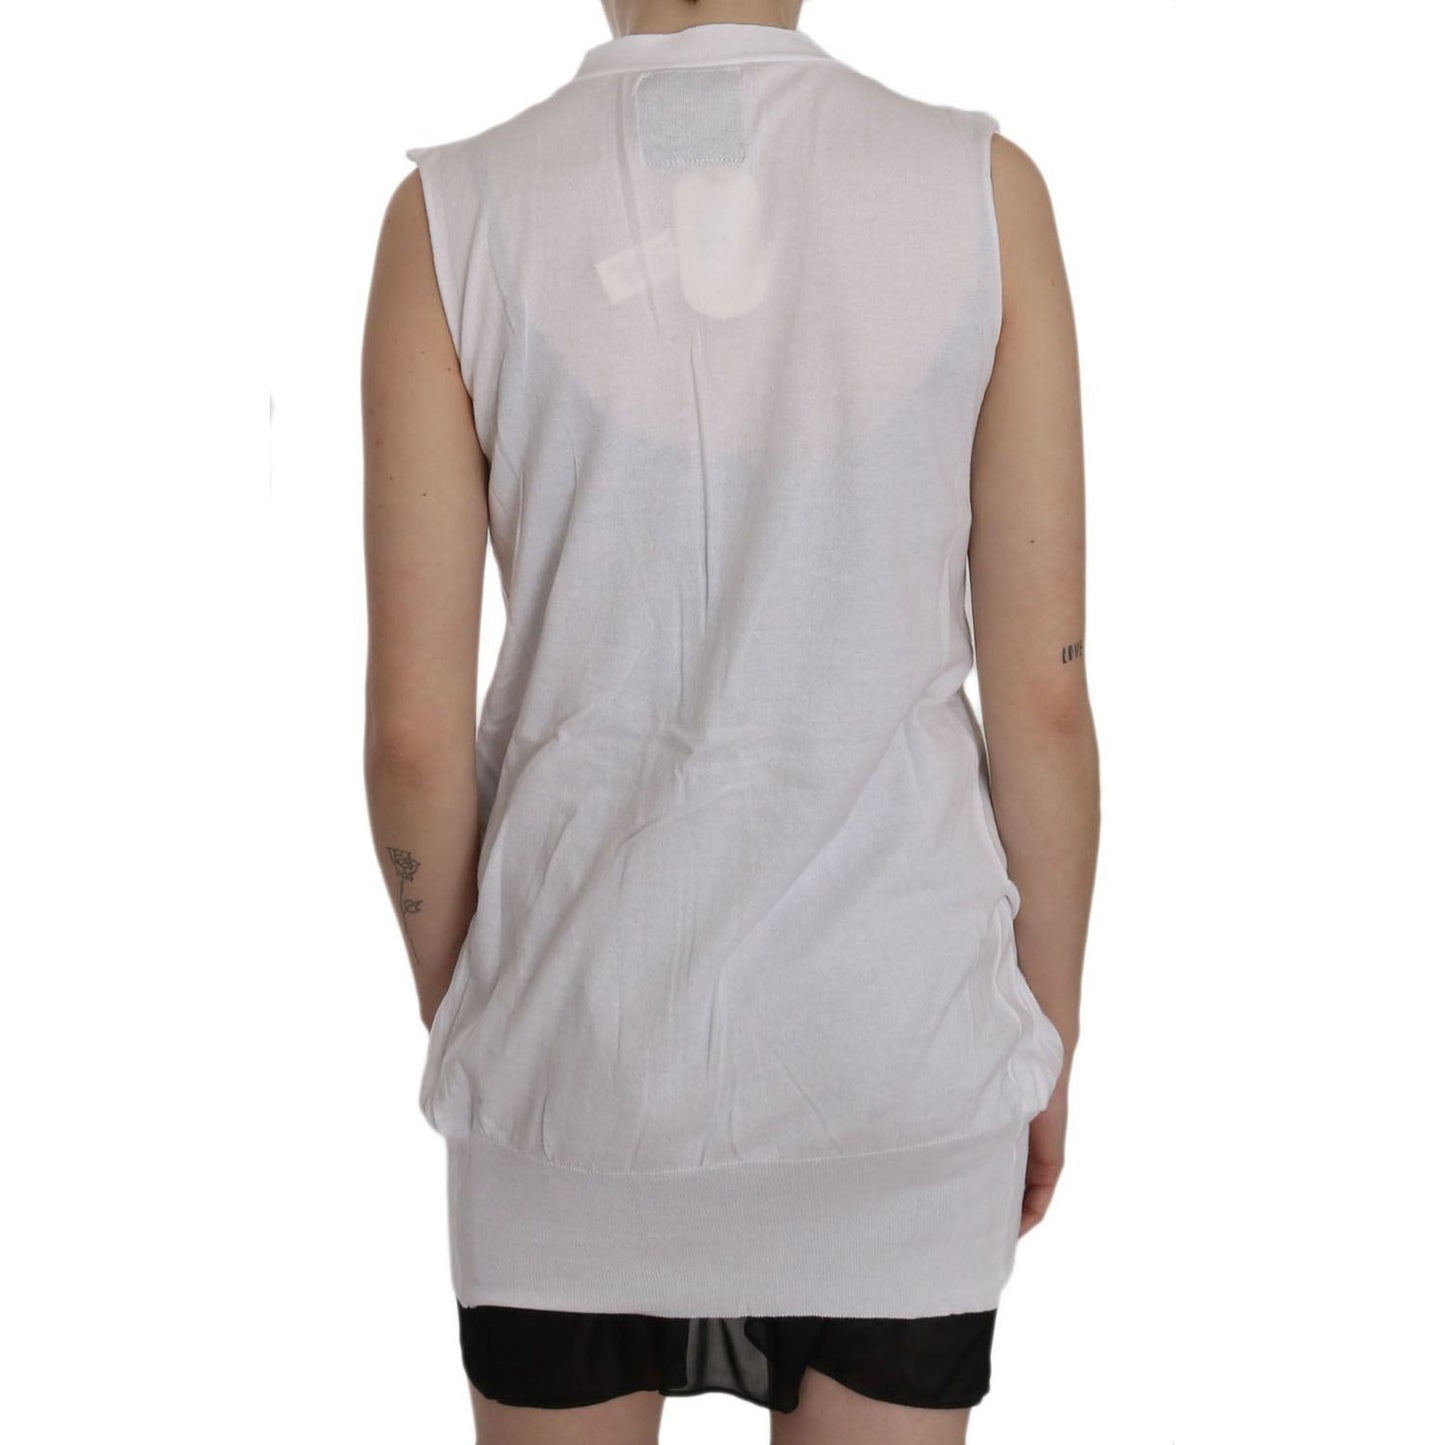 PINK MEMORIES Elegant Sleeveless Cotton Vest in Pristine White white-100-cotton-sleeveless-cardigan-top-vest IMG_1918-9490d20f-fdc.jpg